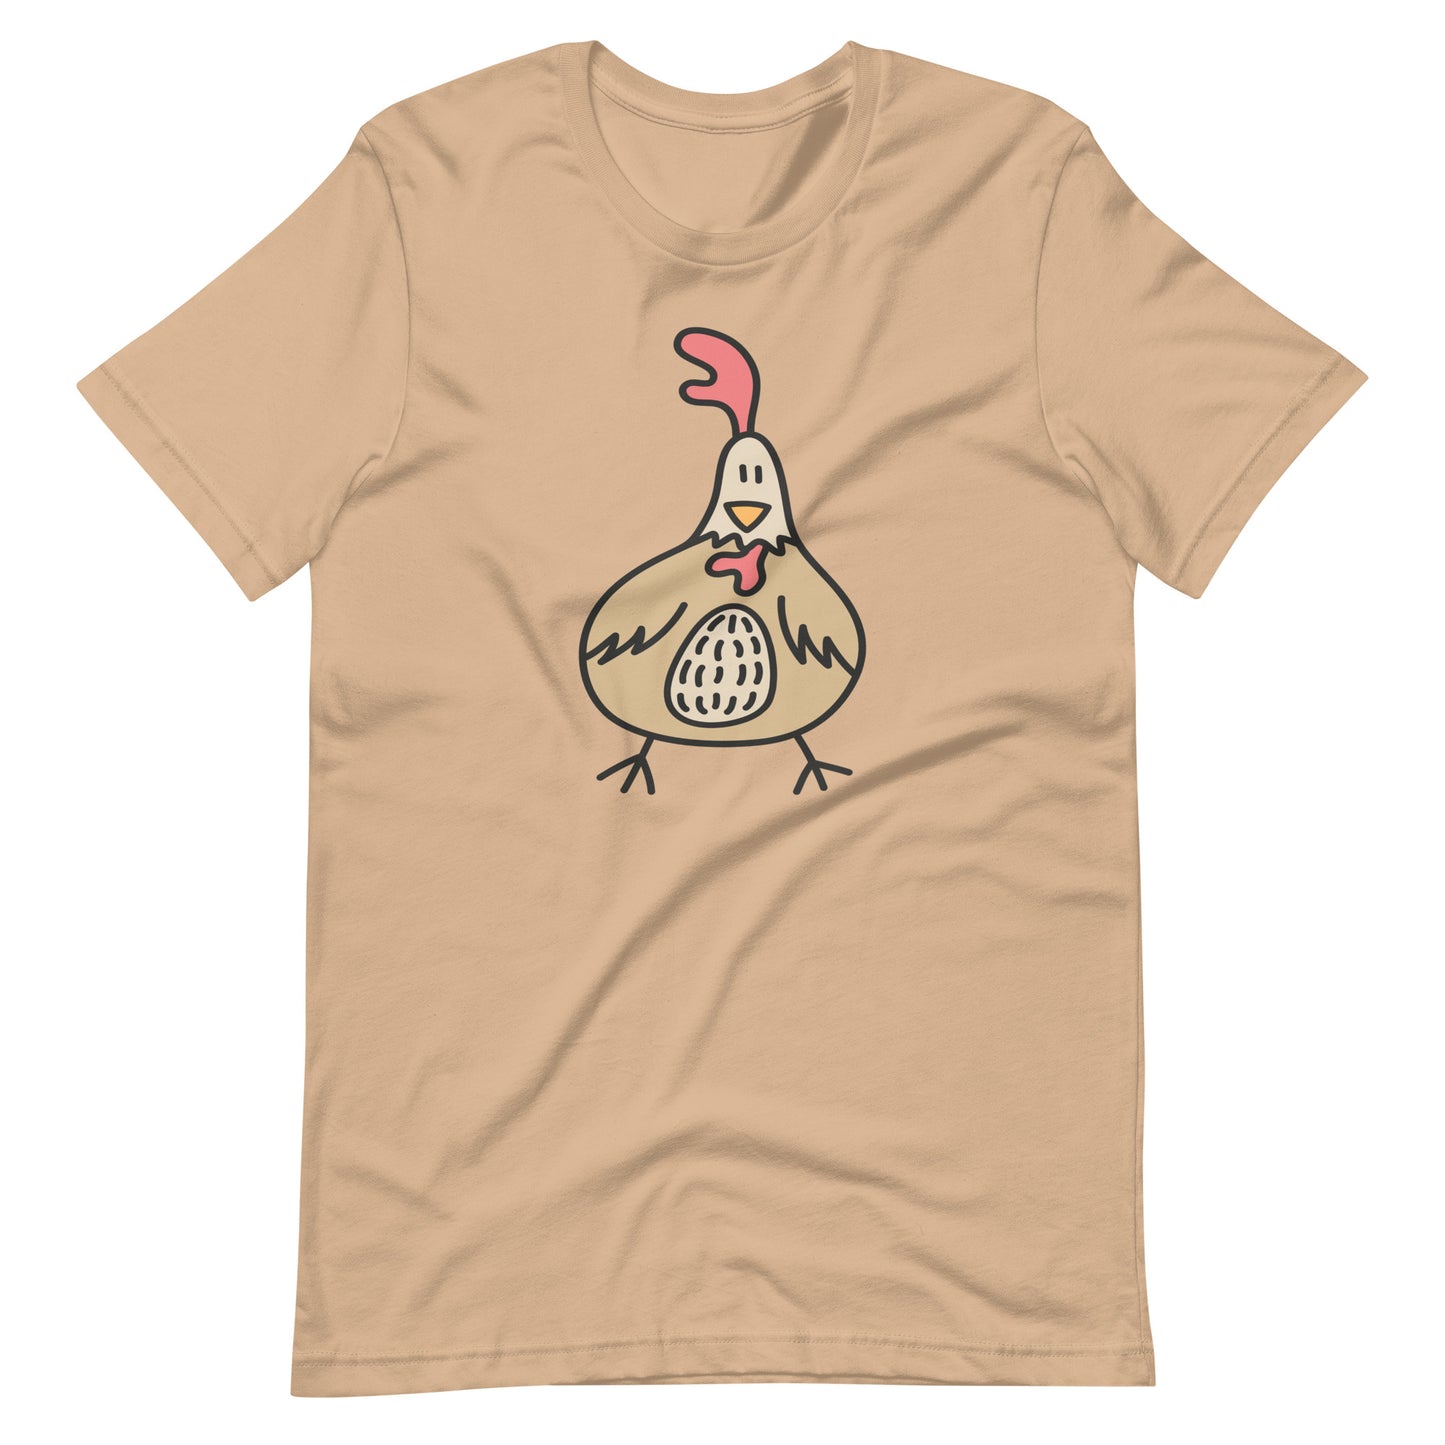 Chicken t-shirt